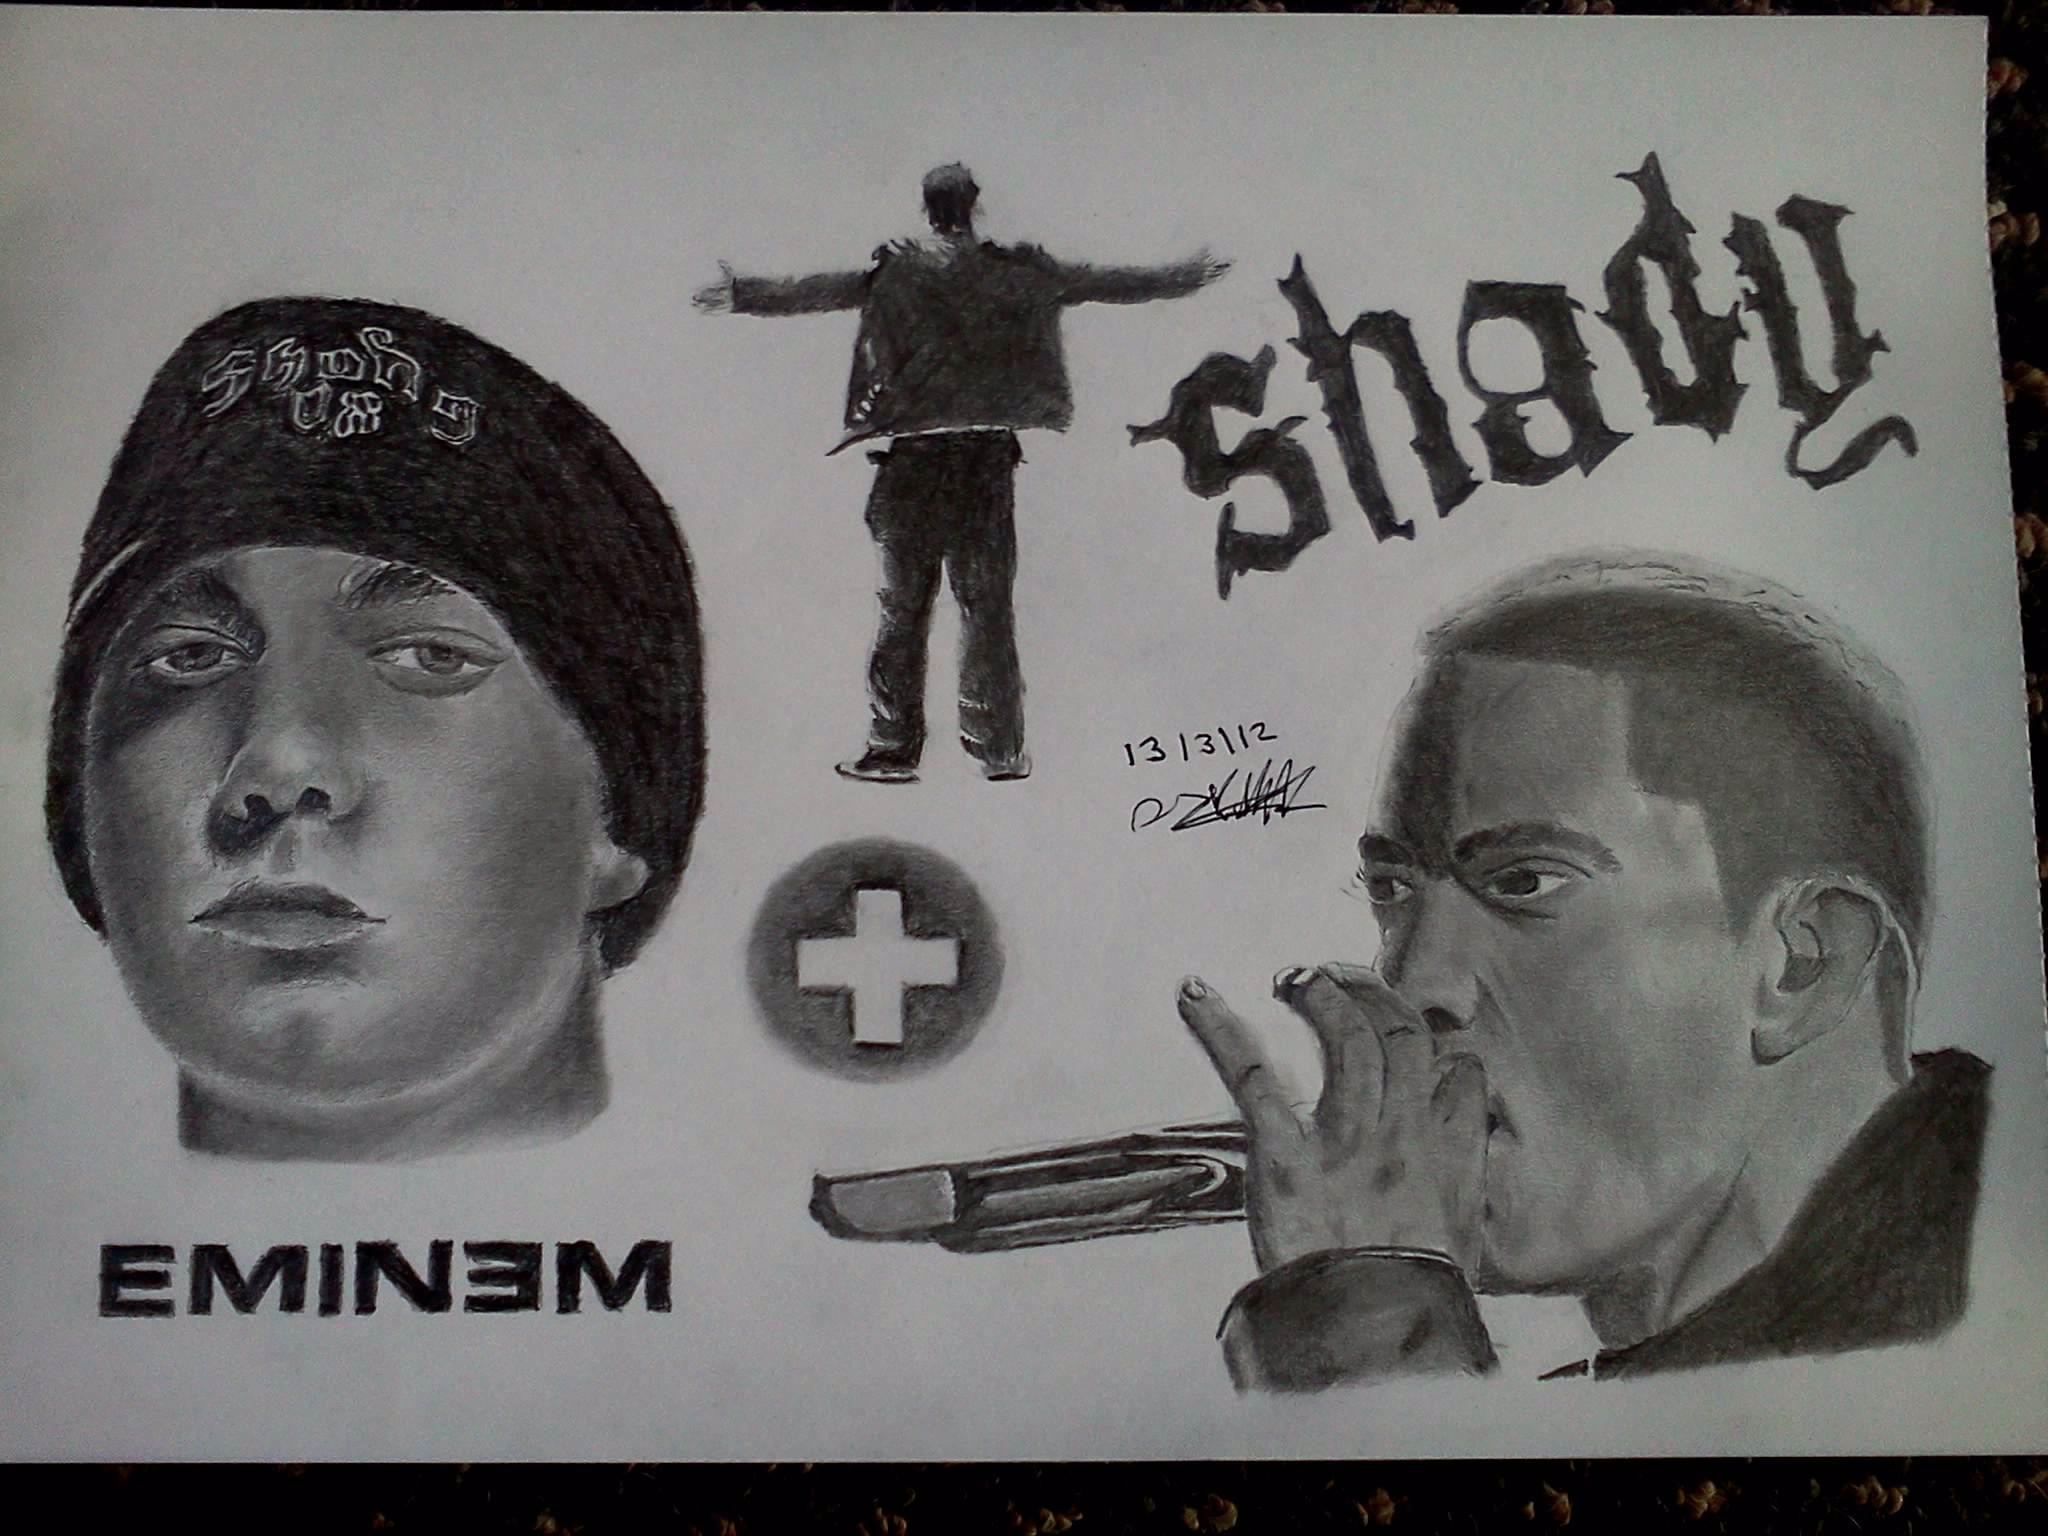 Eminem Slim Shady by Wallpaper 2048x1536. Hot HD Wallpaper